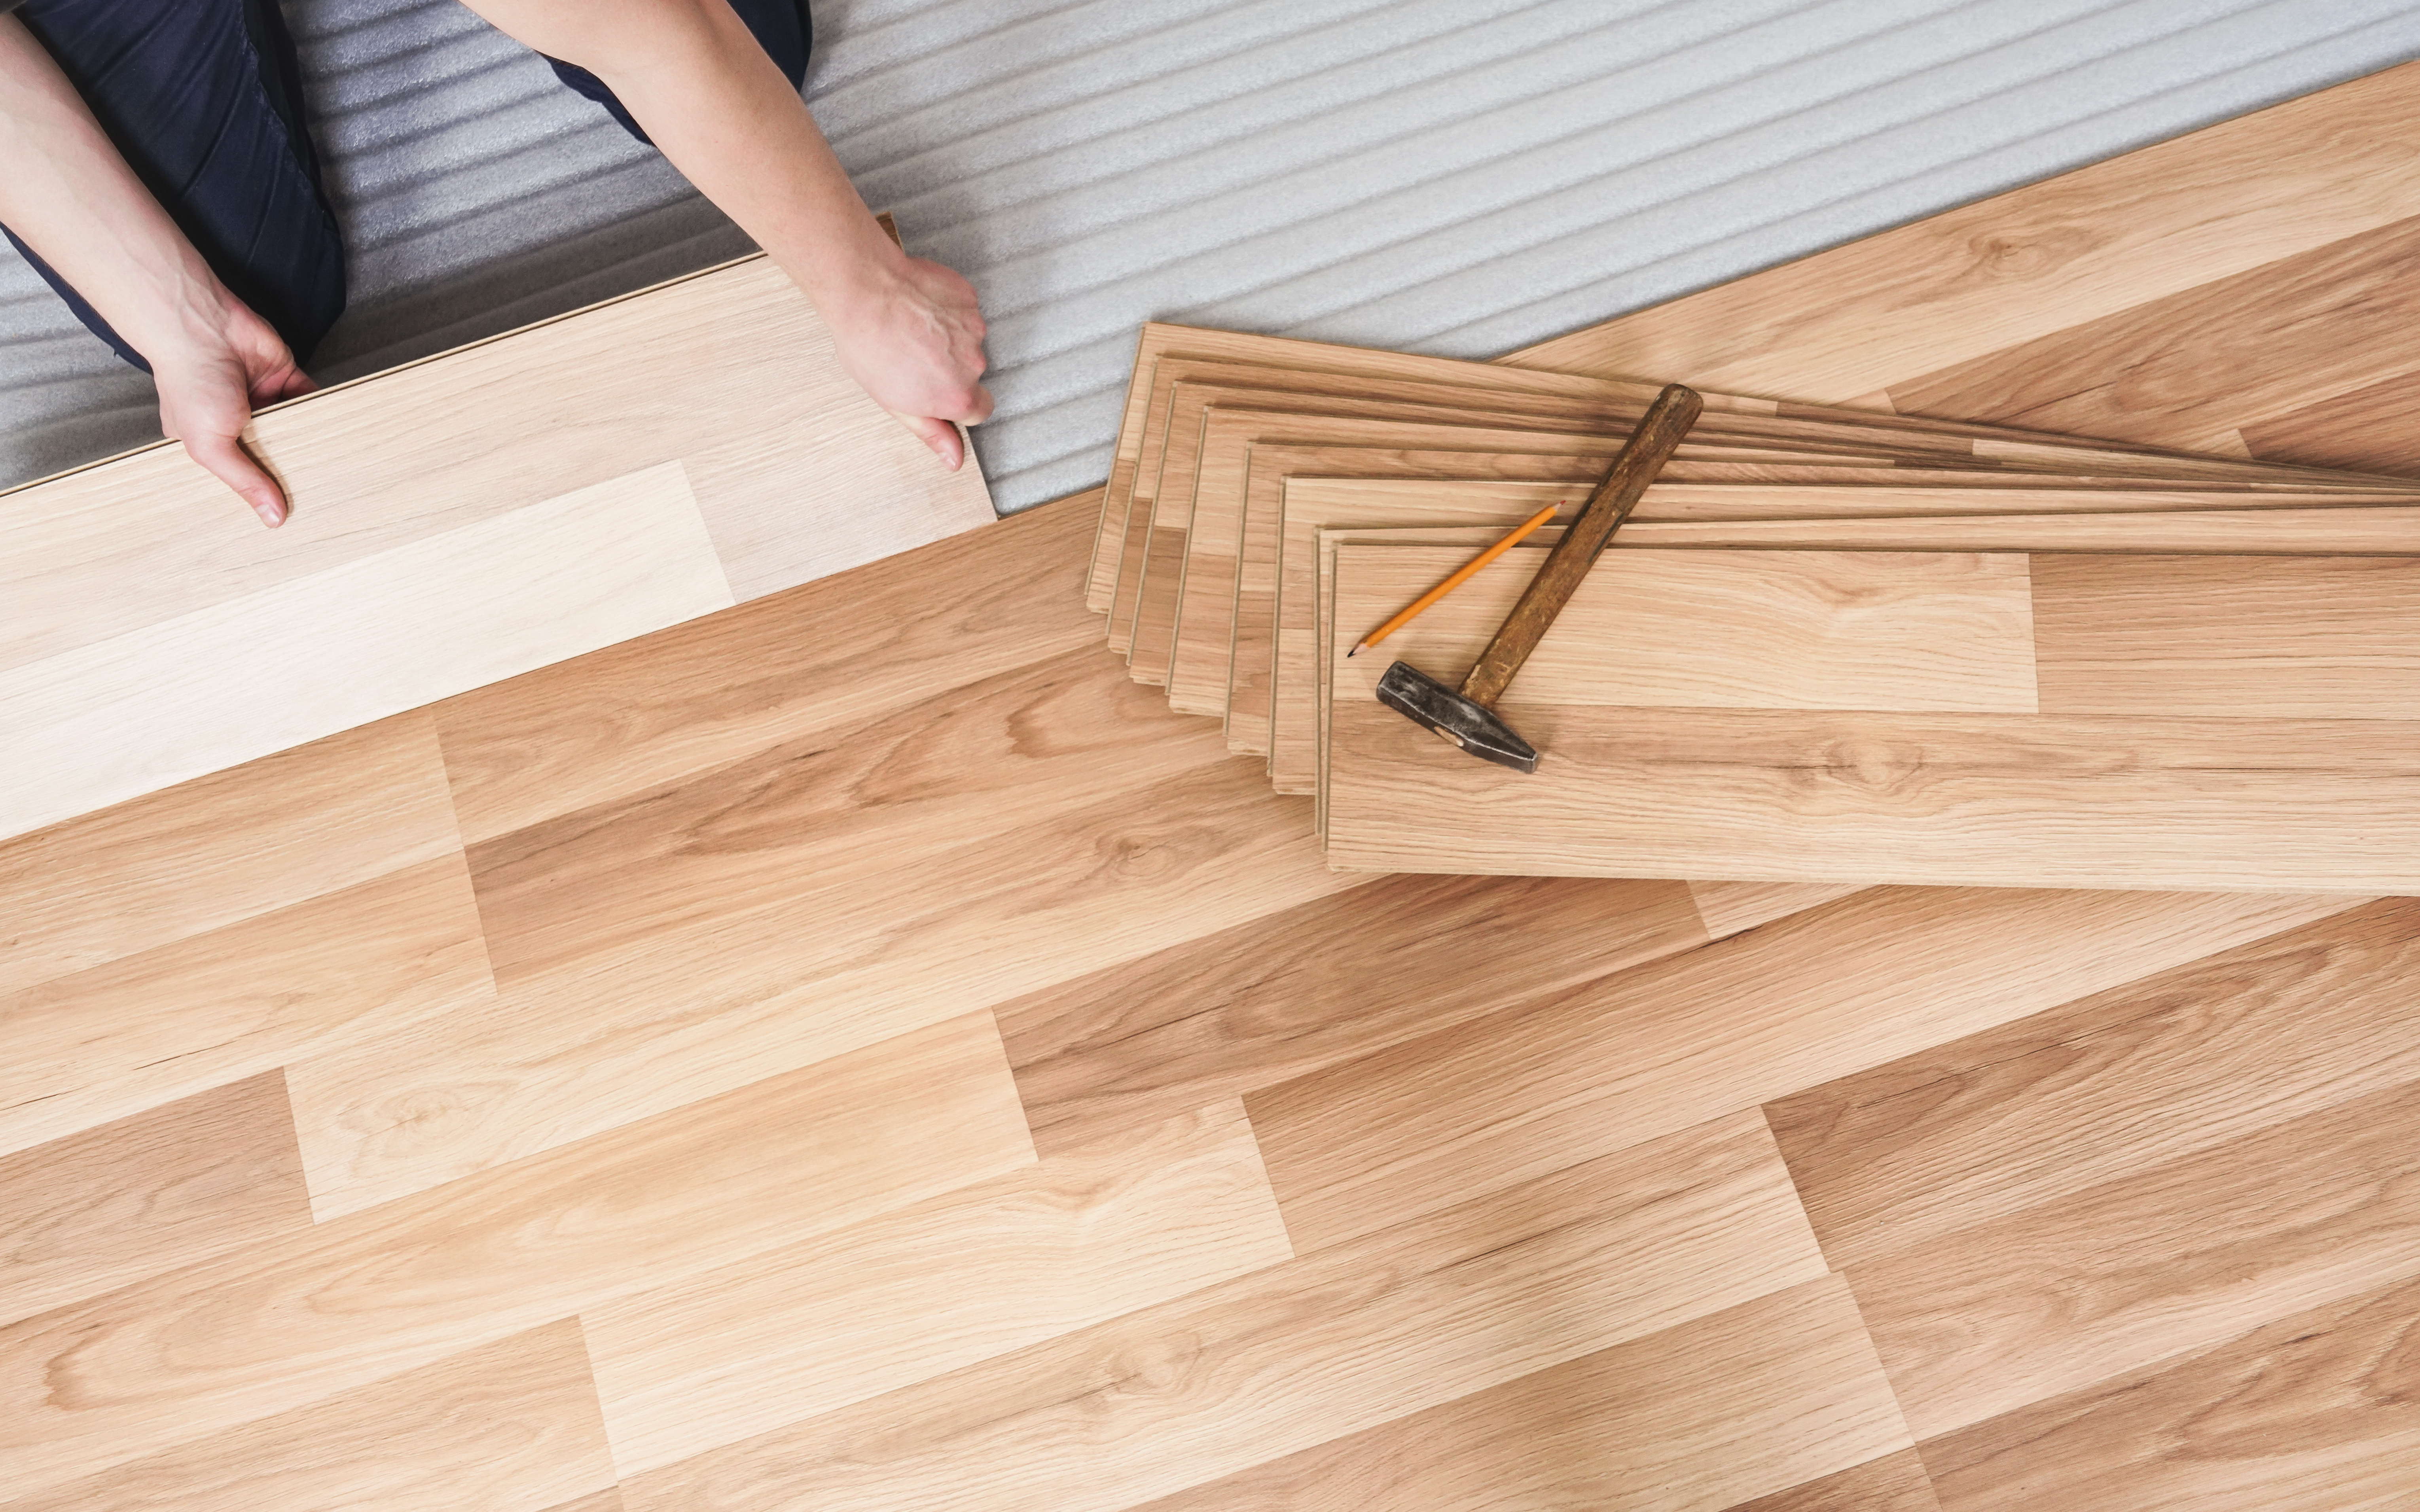 Don't Let Carpet Glue Ruin Your Flooring